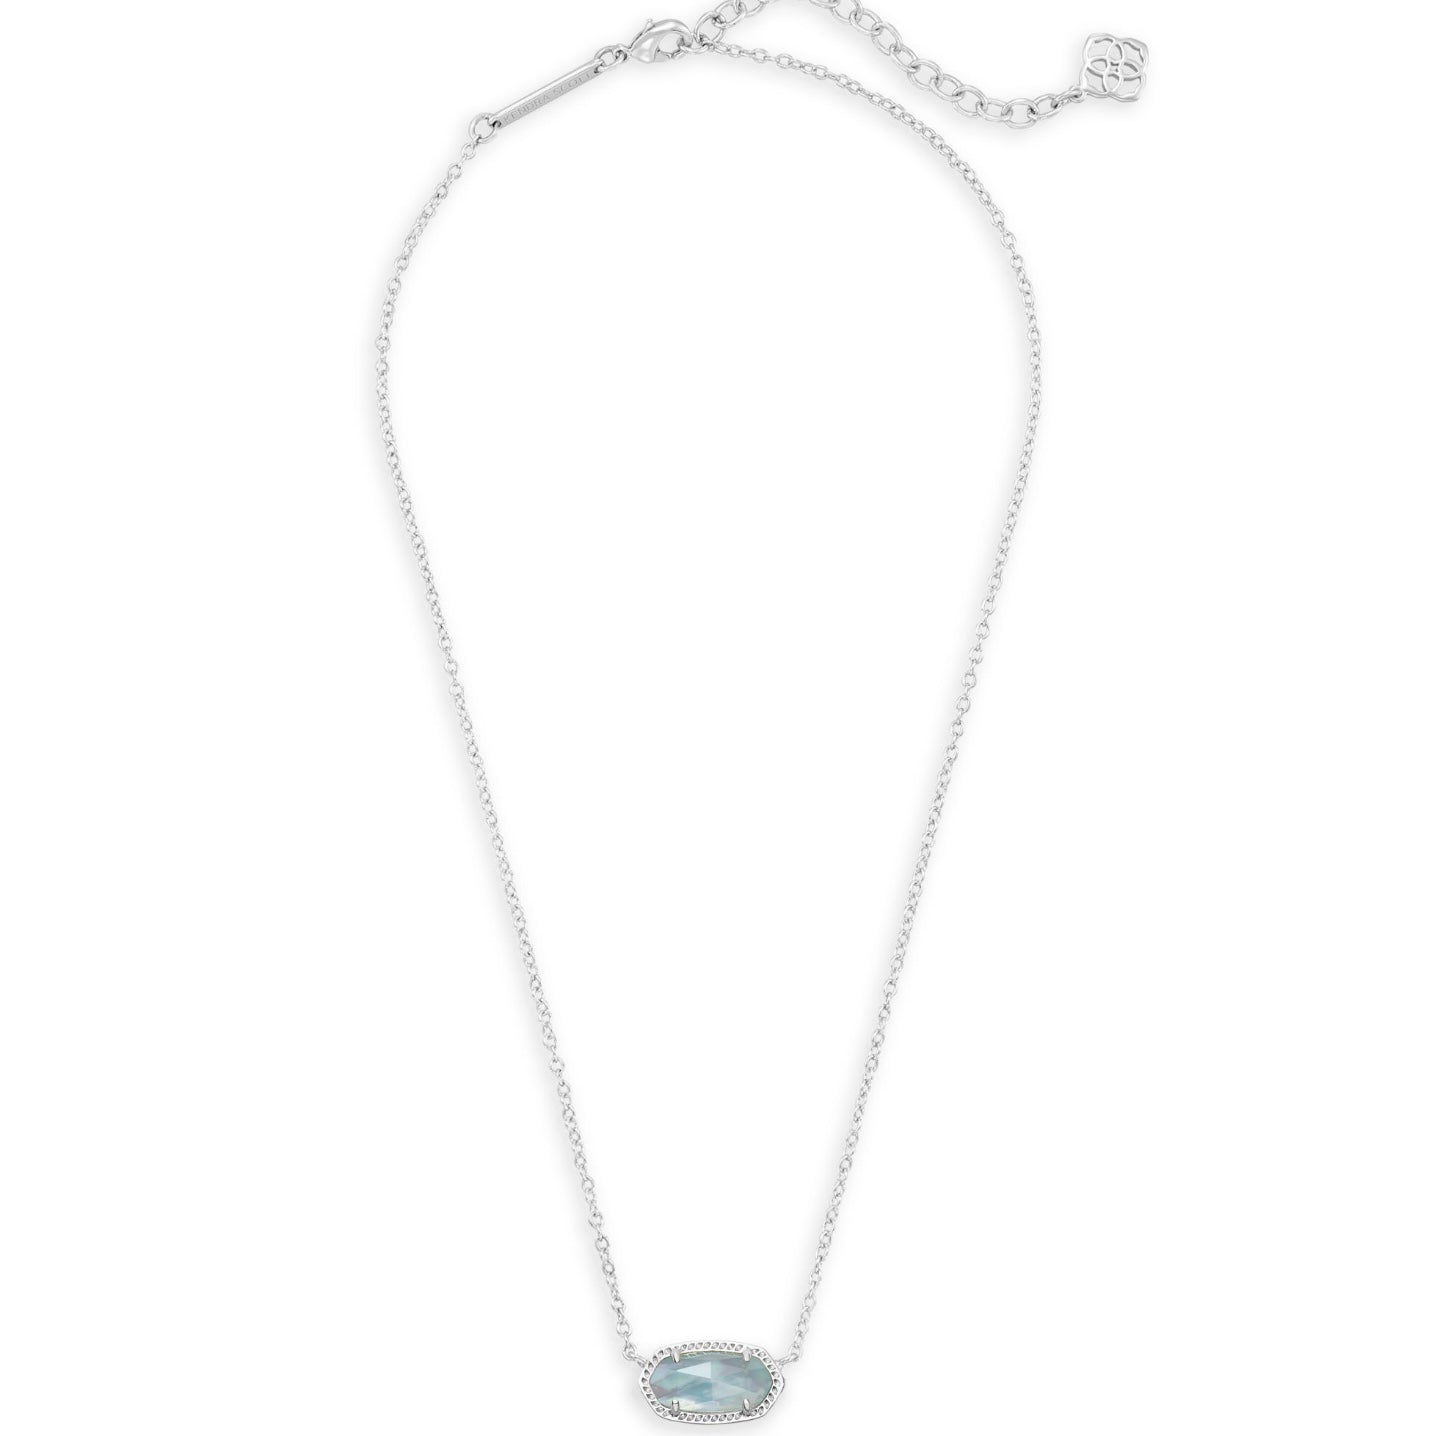 KENDRA SCOTT Elisa Silver Pendant Necklace in Light Blue Illusion - The Street Boutique 